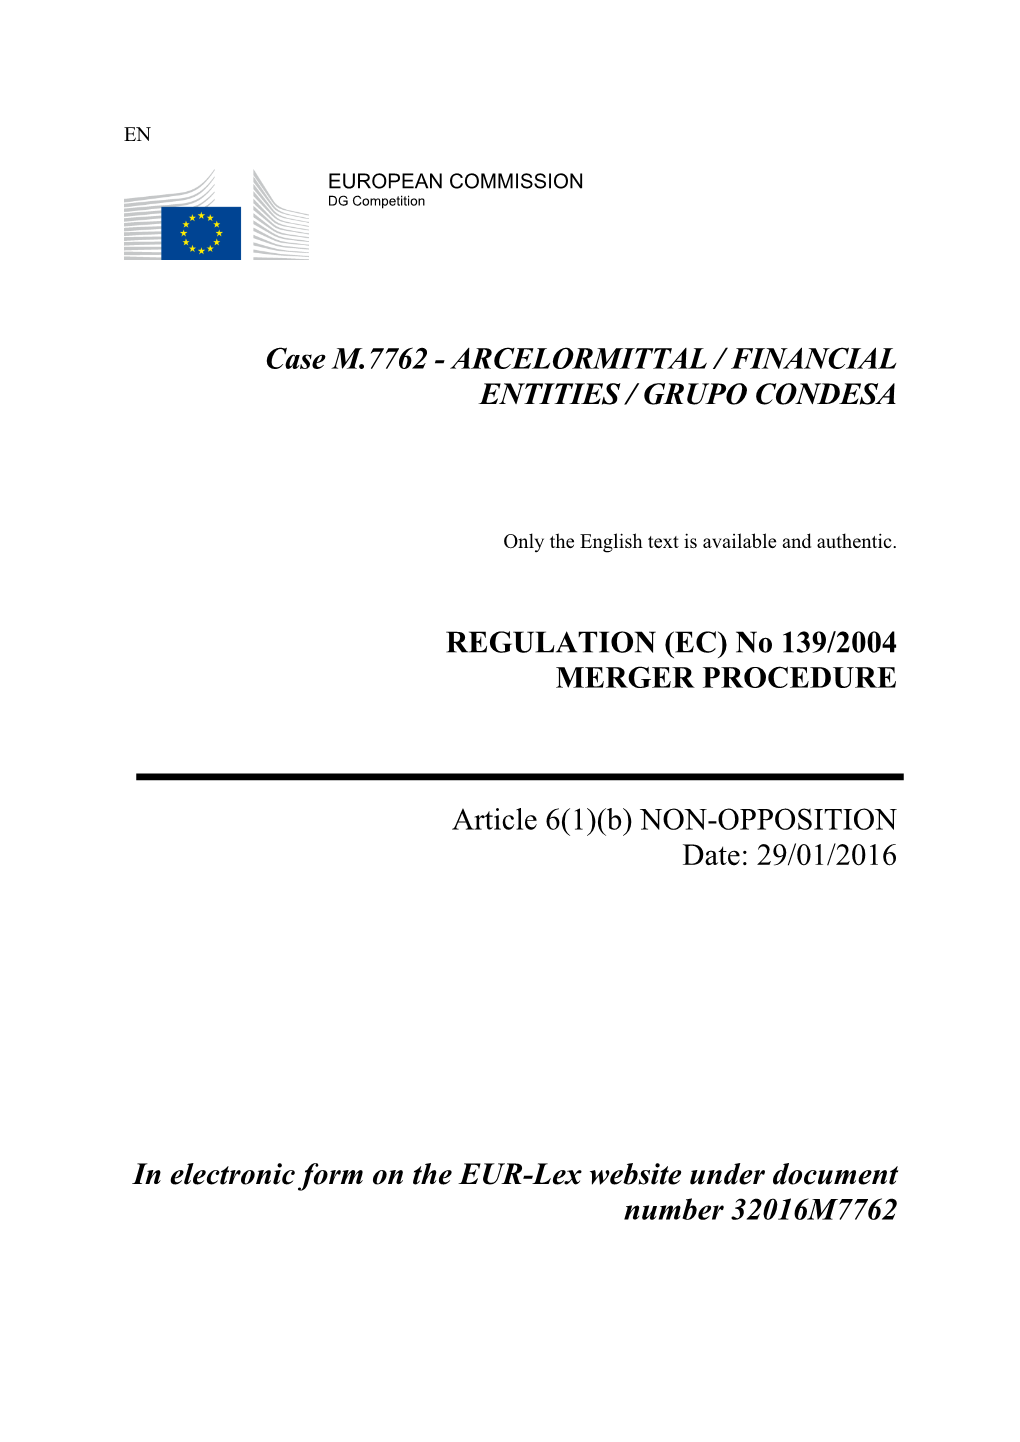 Case M.7762 - ARCELORMITTAL / FINANCIAL ENTITIES / GRUPO CONDESA